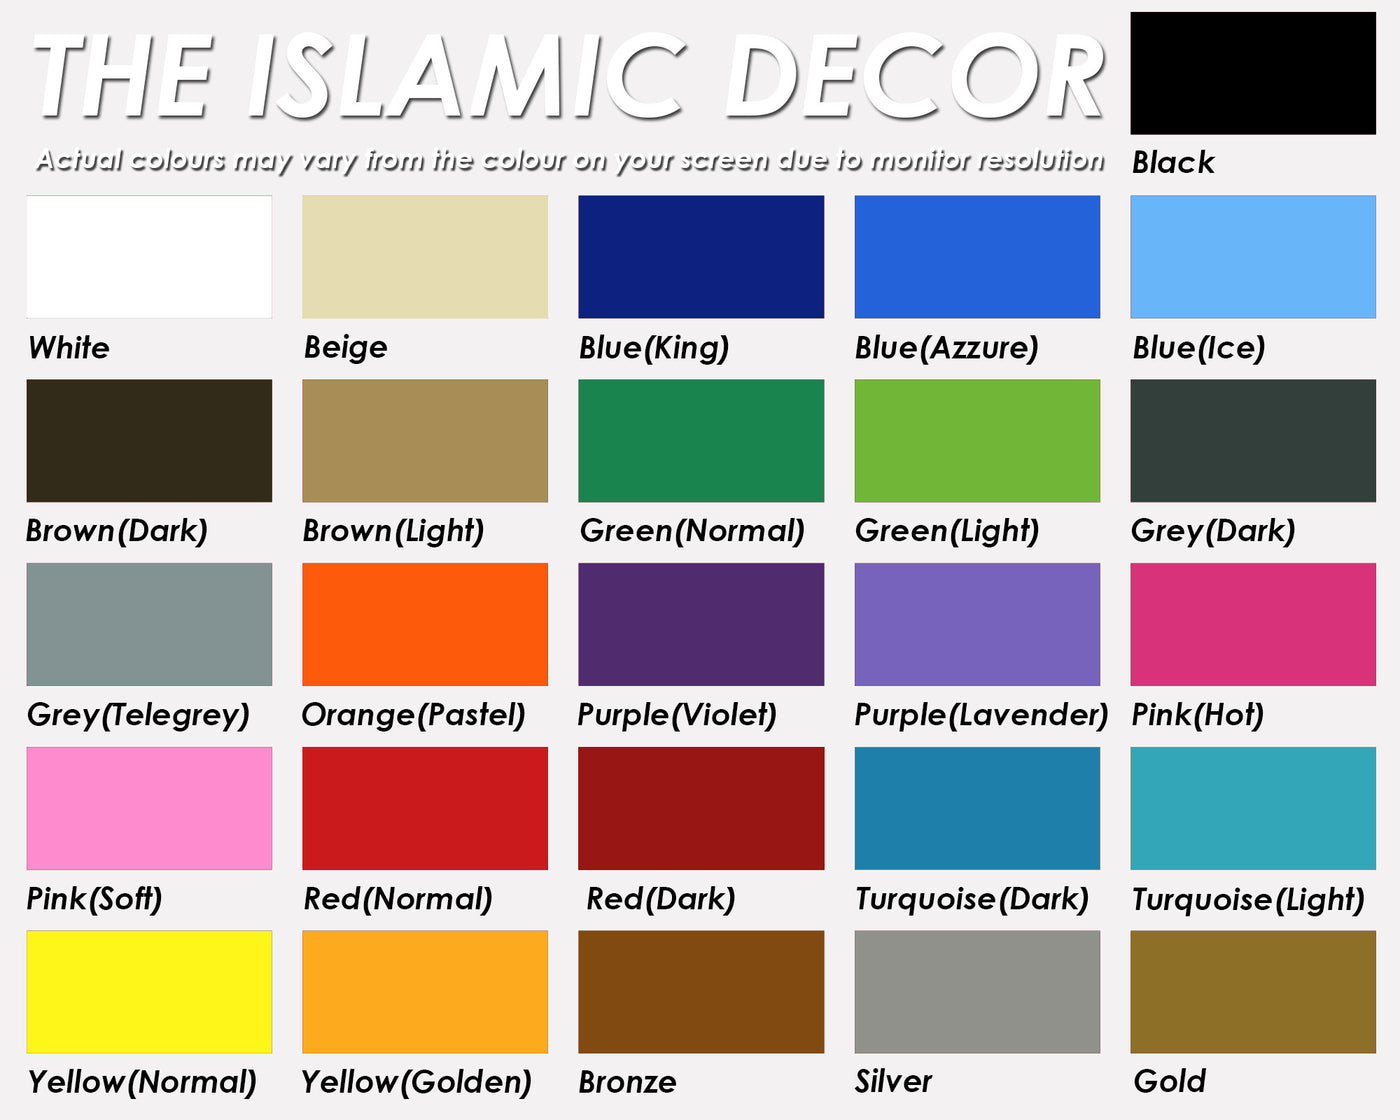 Dining Design Version 04 Decal - The Islamic Decor - 2